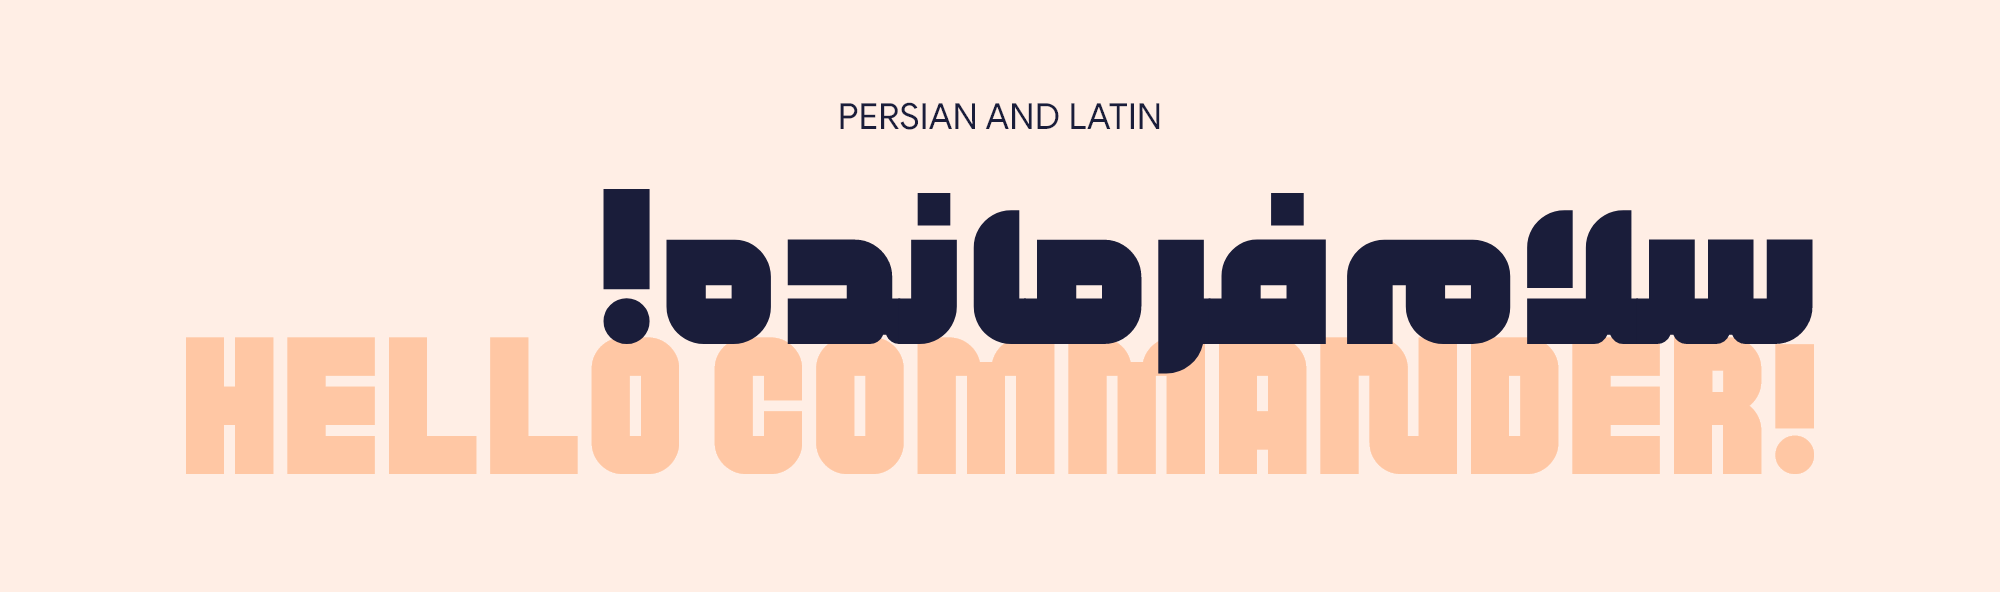 PERSIAN VS LATIN 1